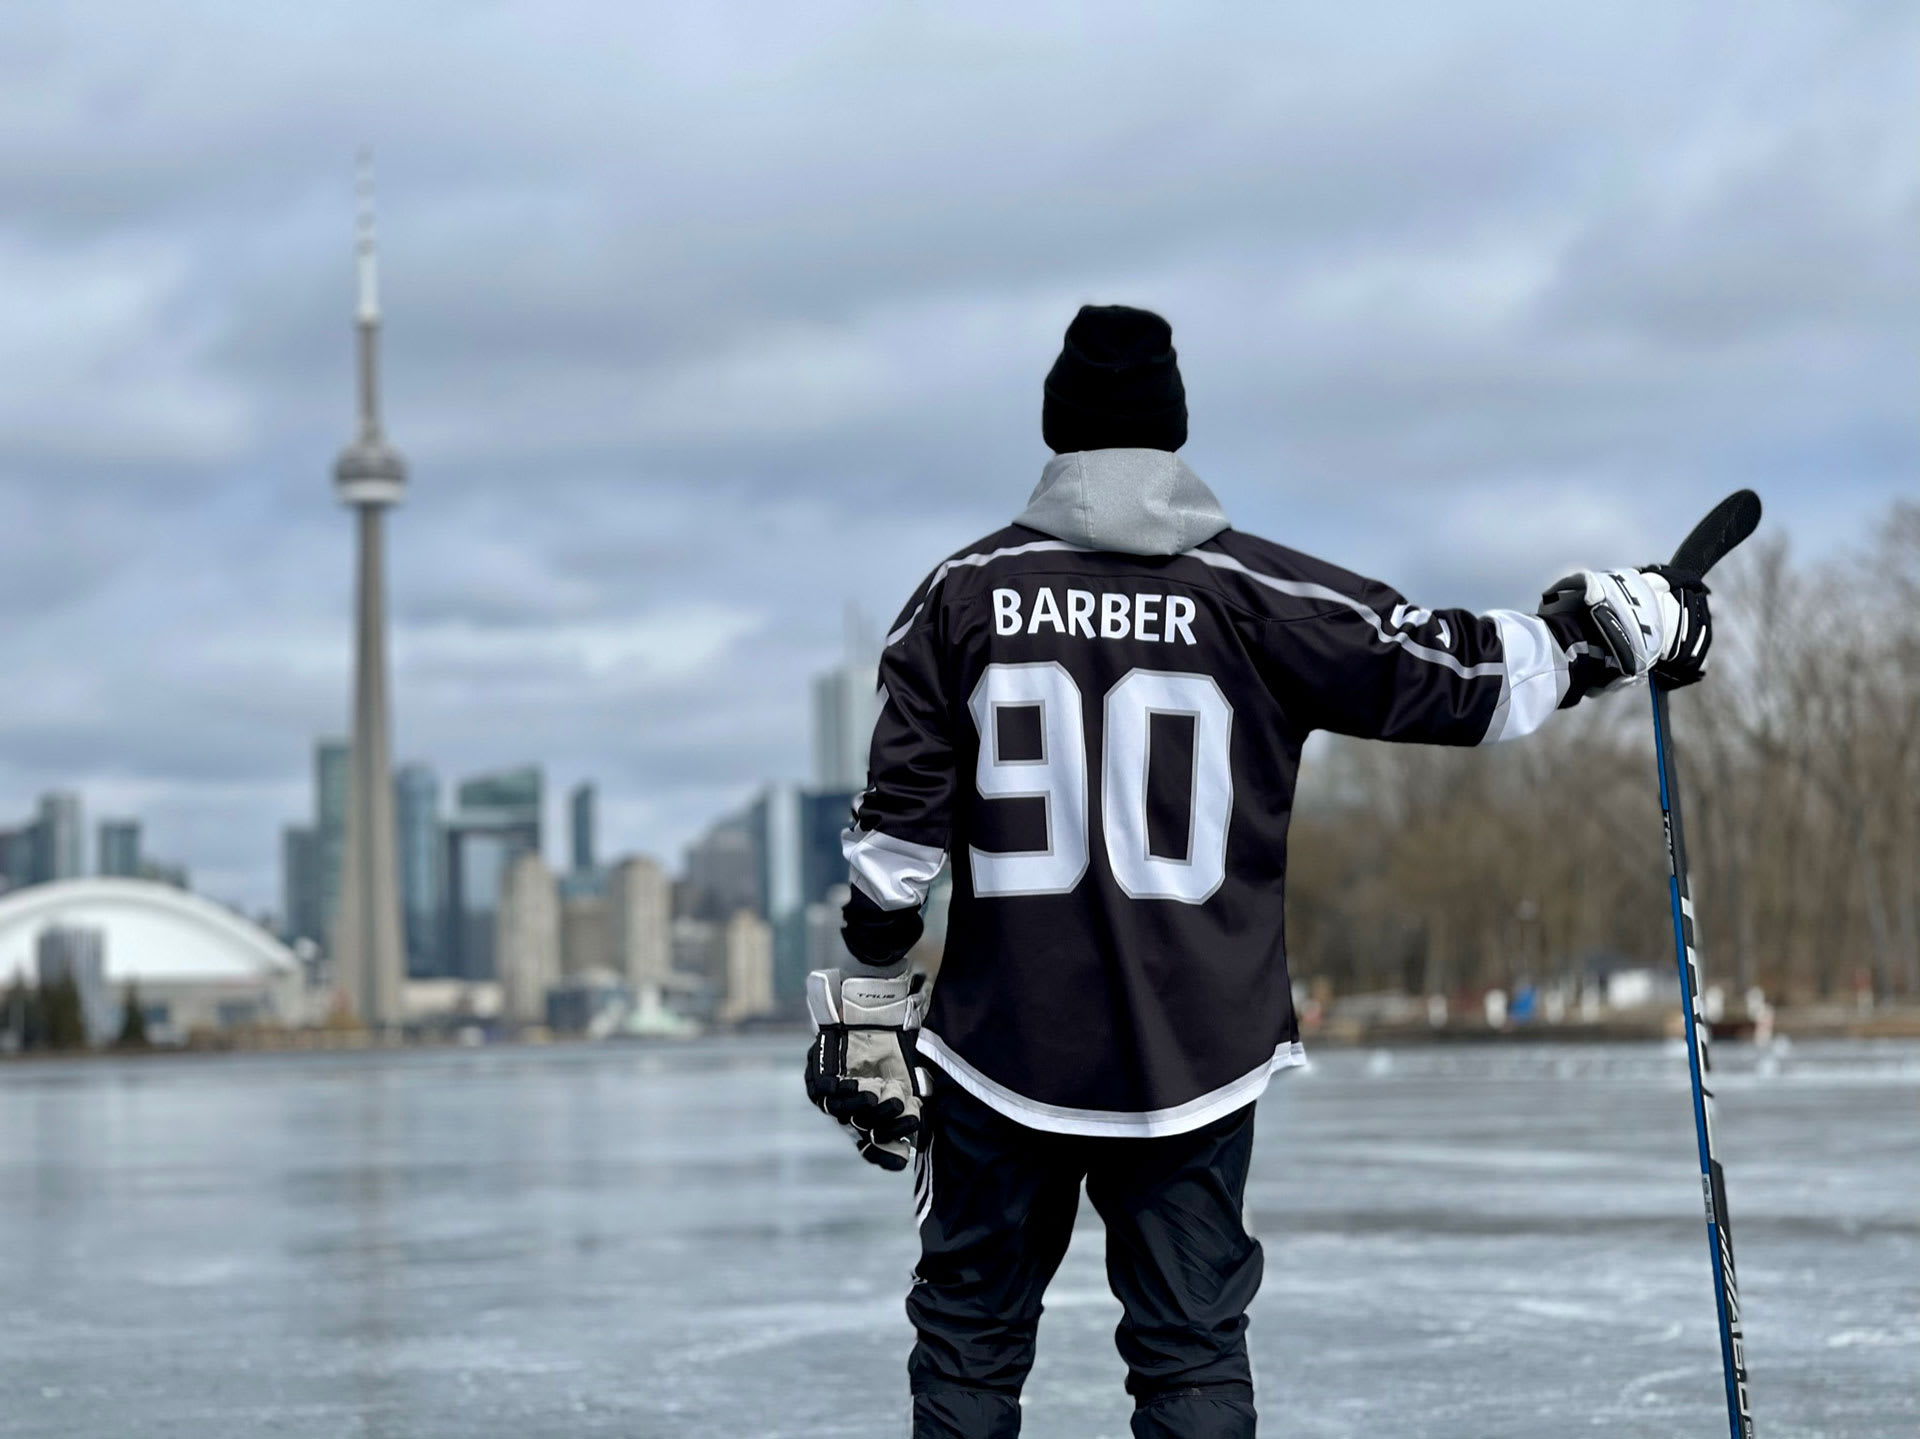 Pavel Barber poses on Lake Ontario